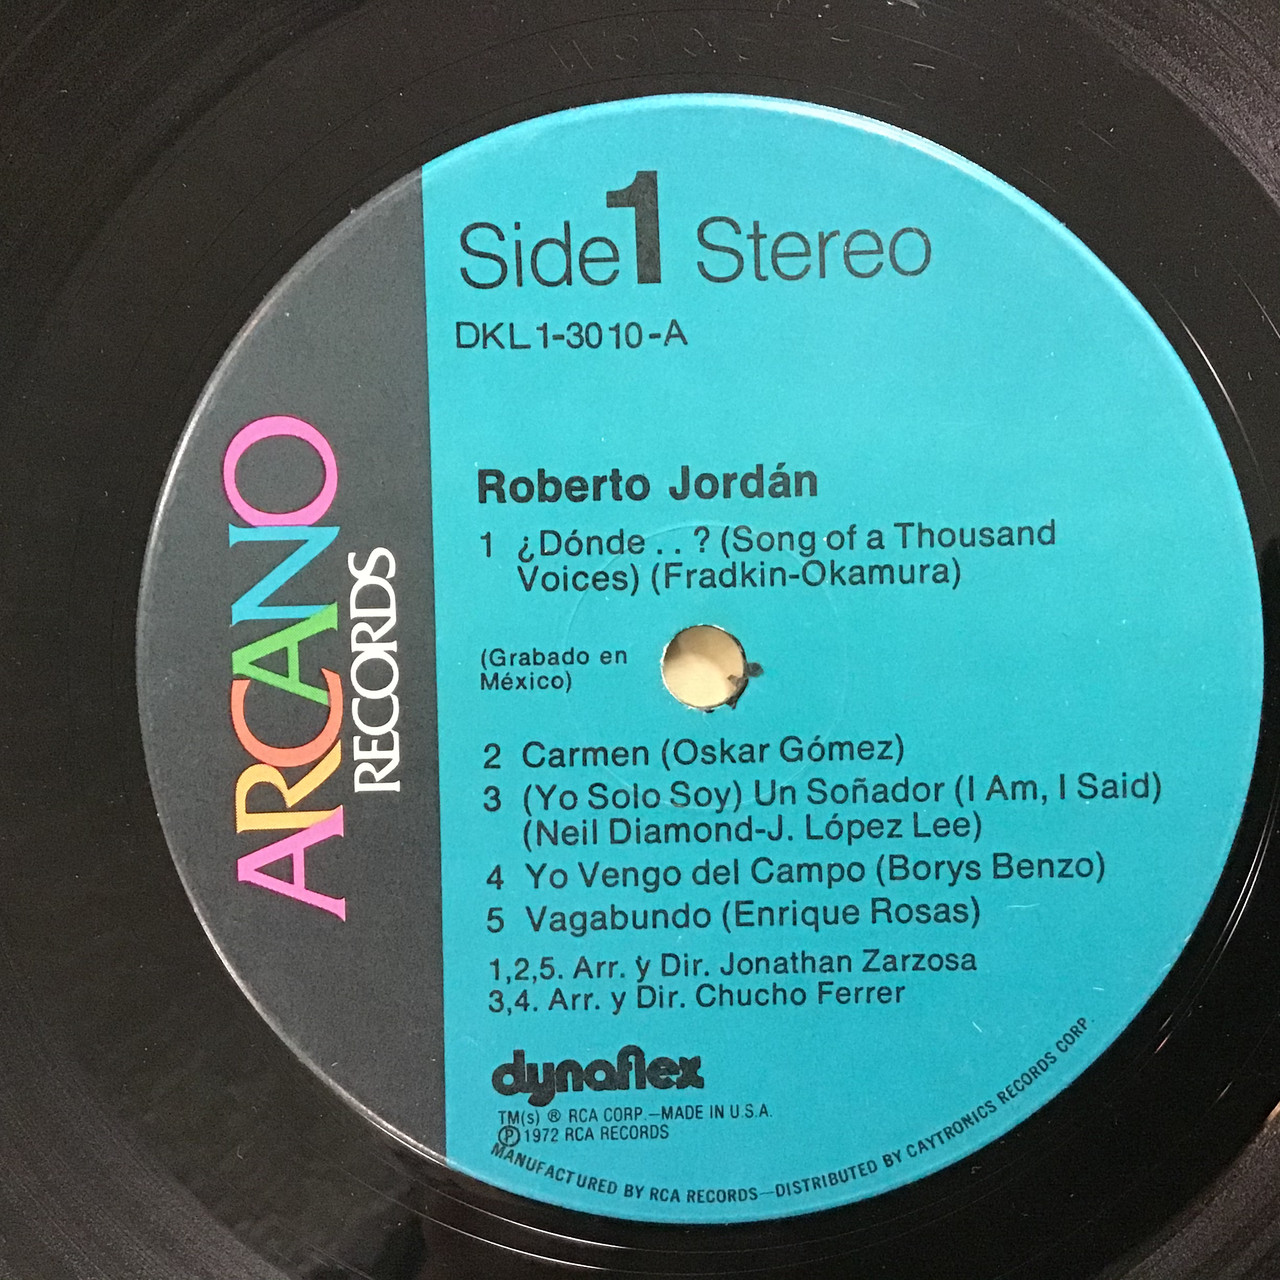 Roberto Jordan - Roberto Jordan - IMPORT - vinyl record LP